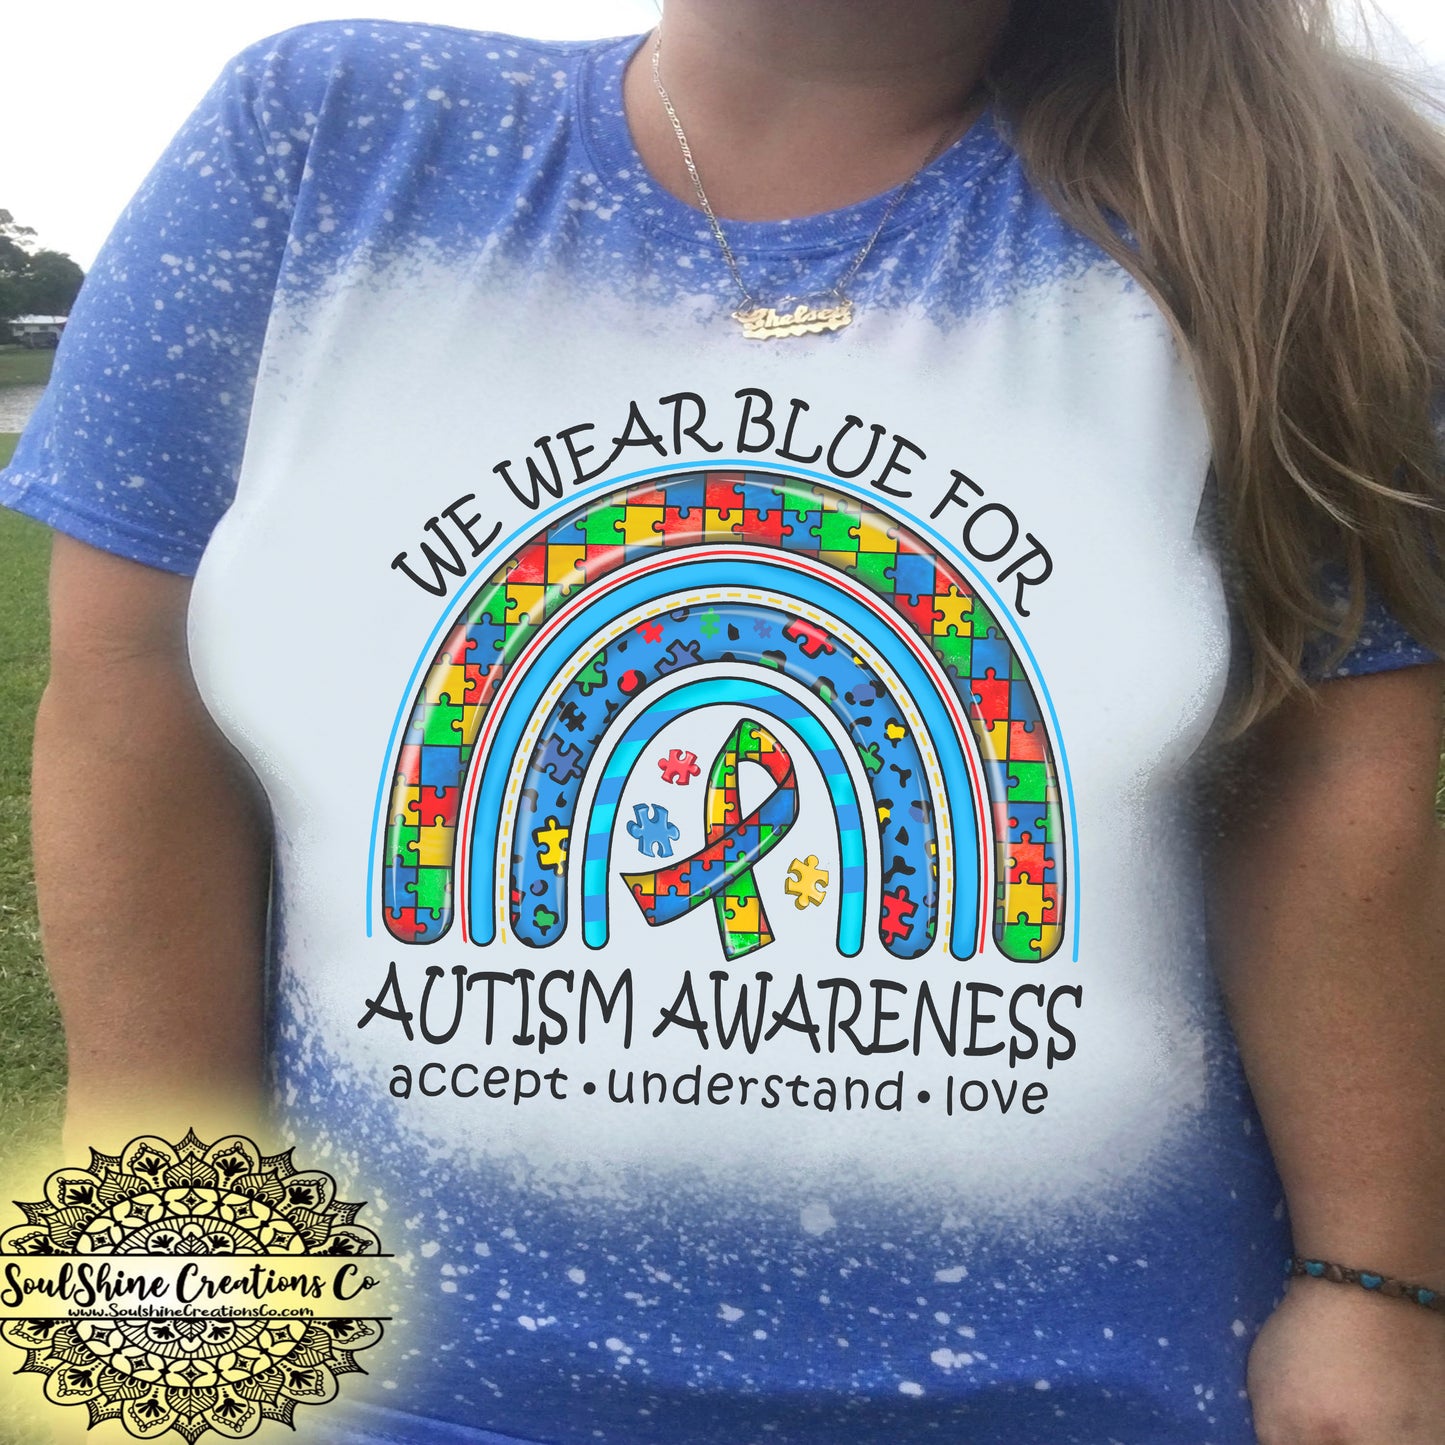 We Wear Blue for Autism Awareness Shirt